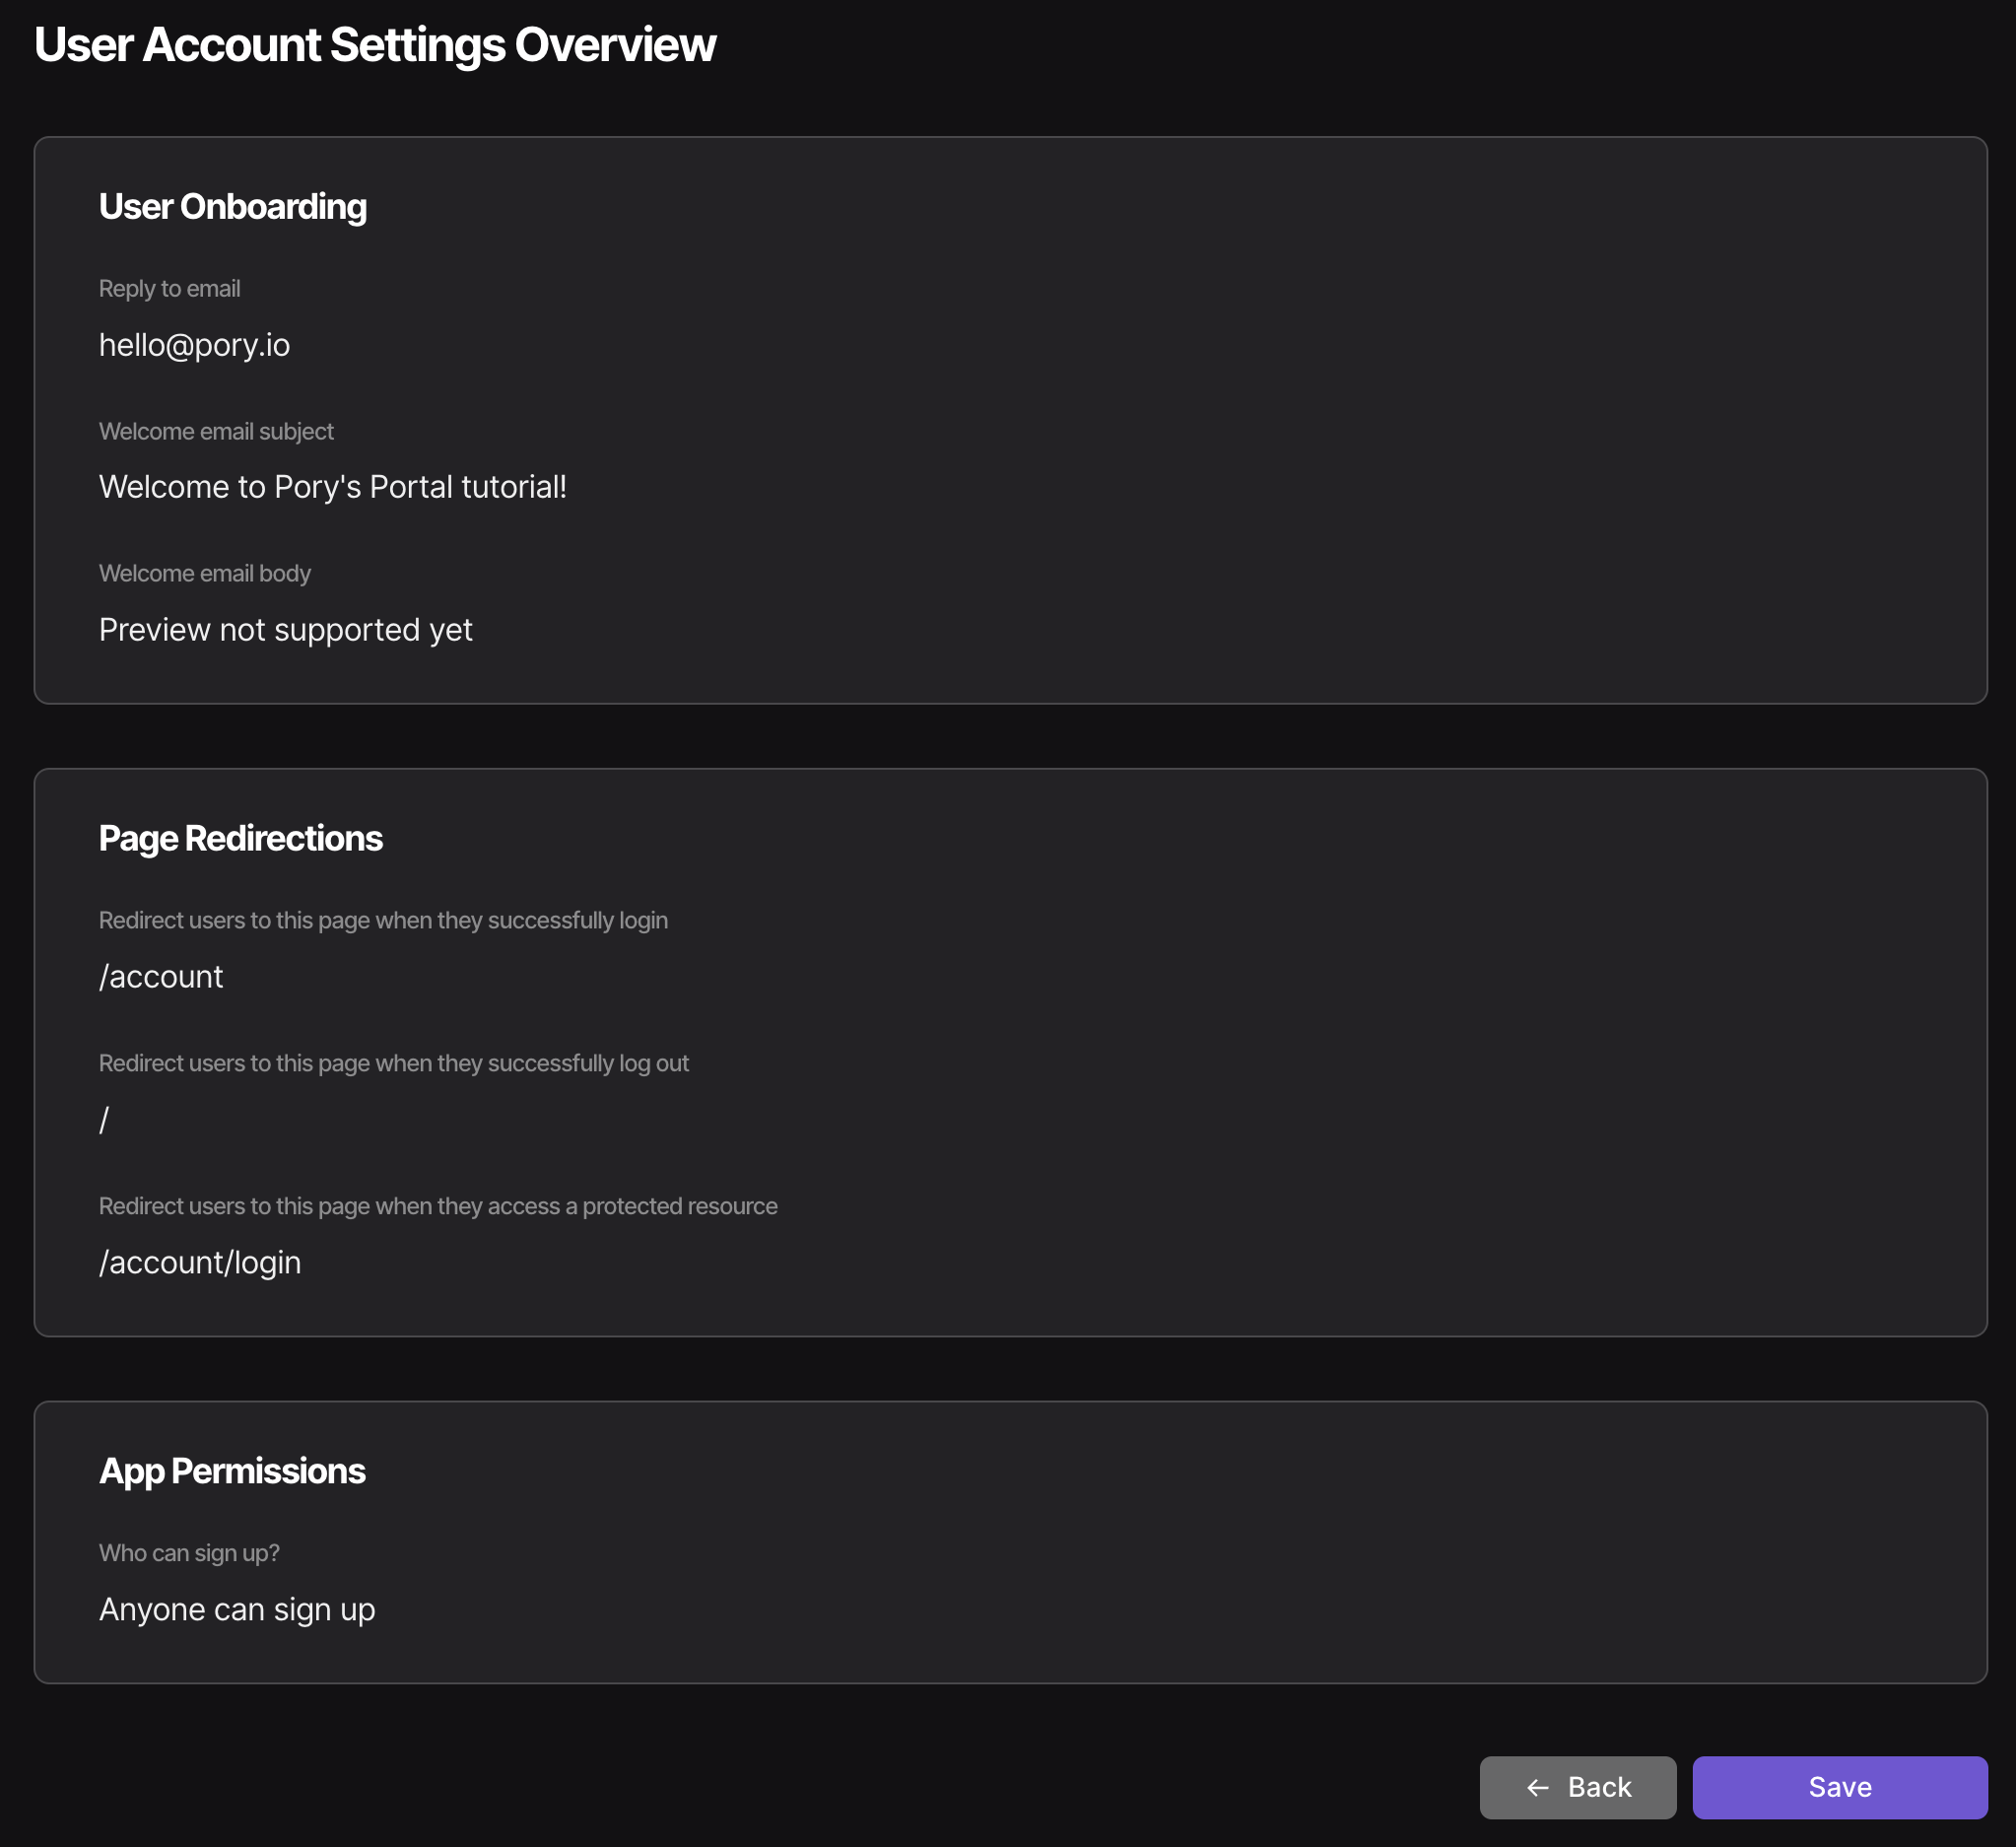 User account settings summary